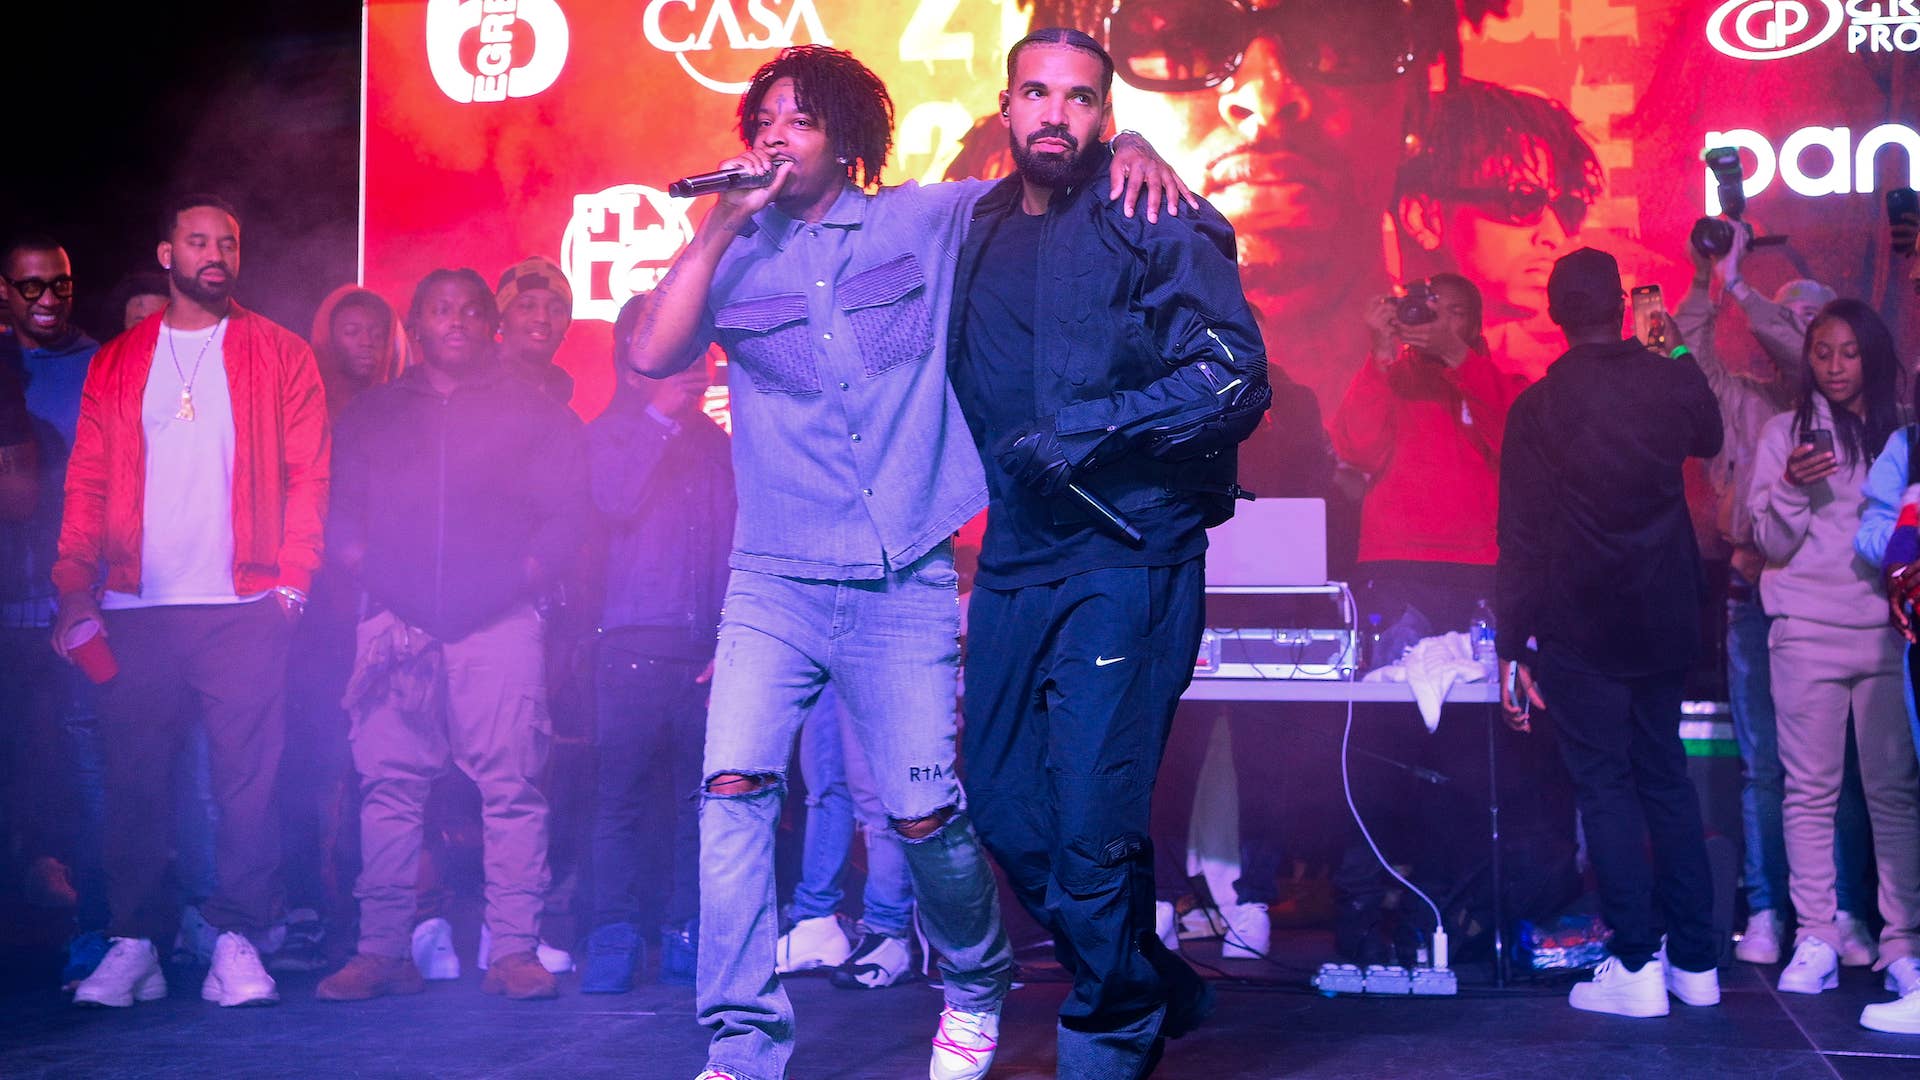 Drake & 21 Savage Concert Outfit Links